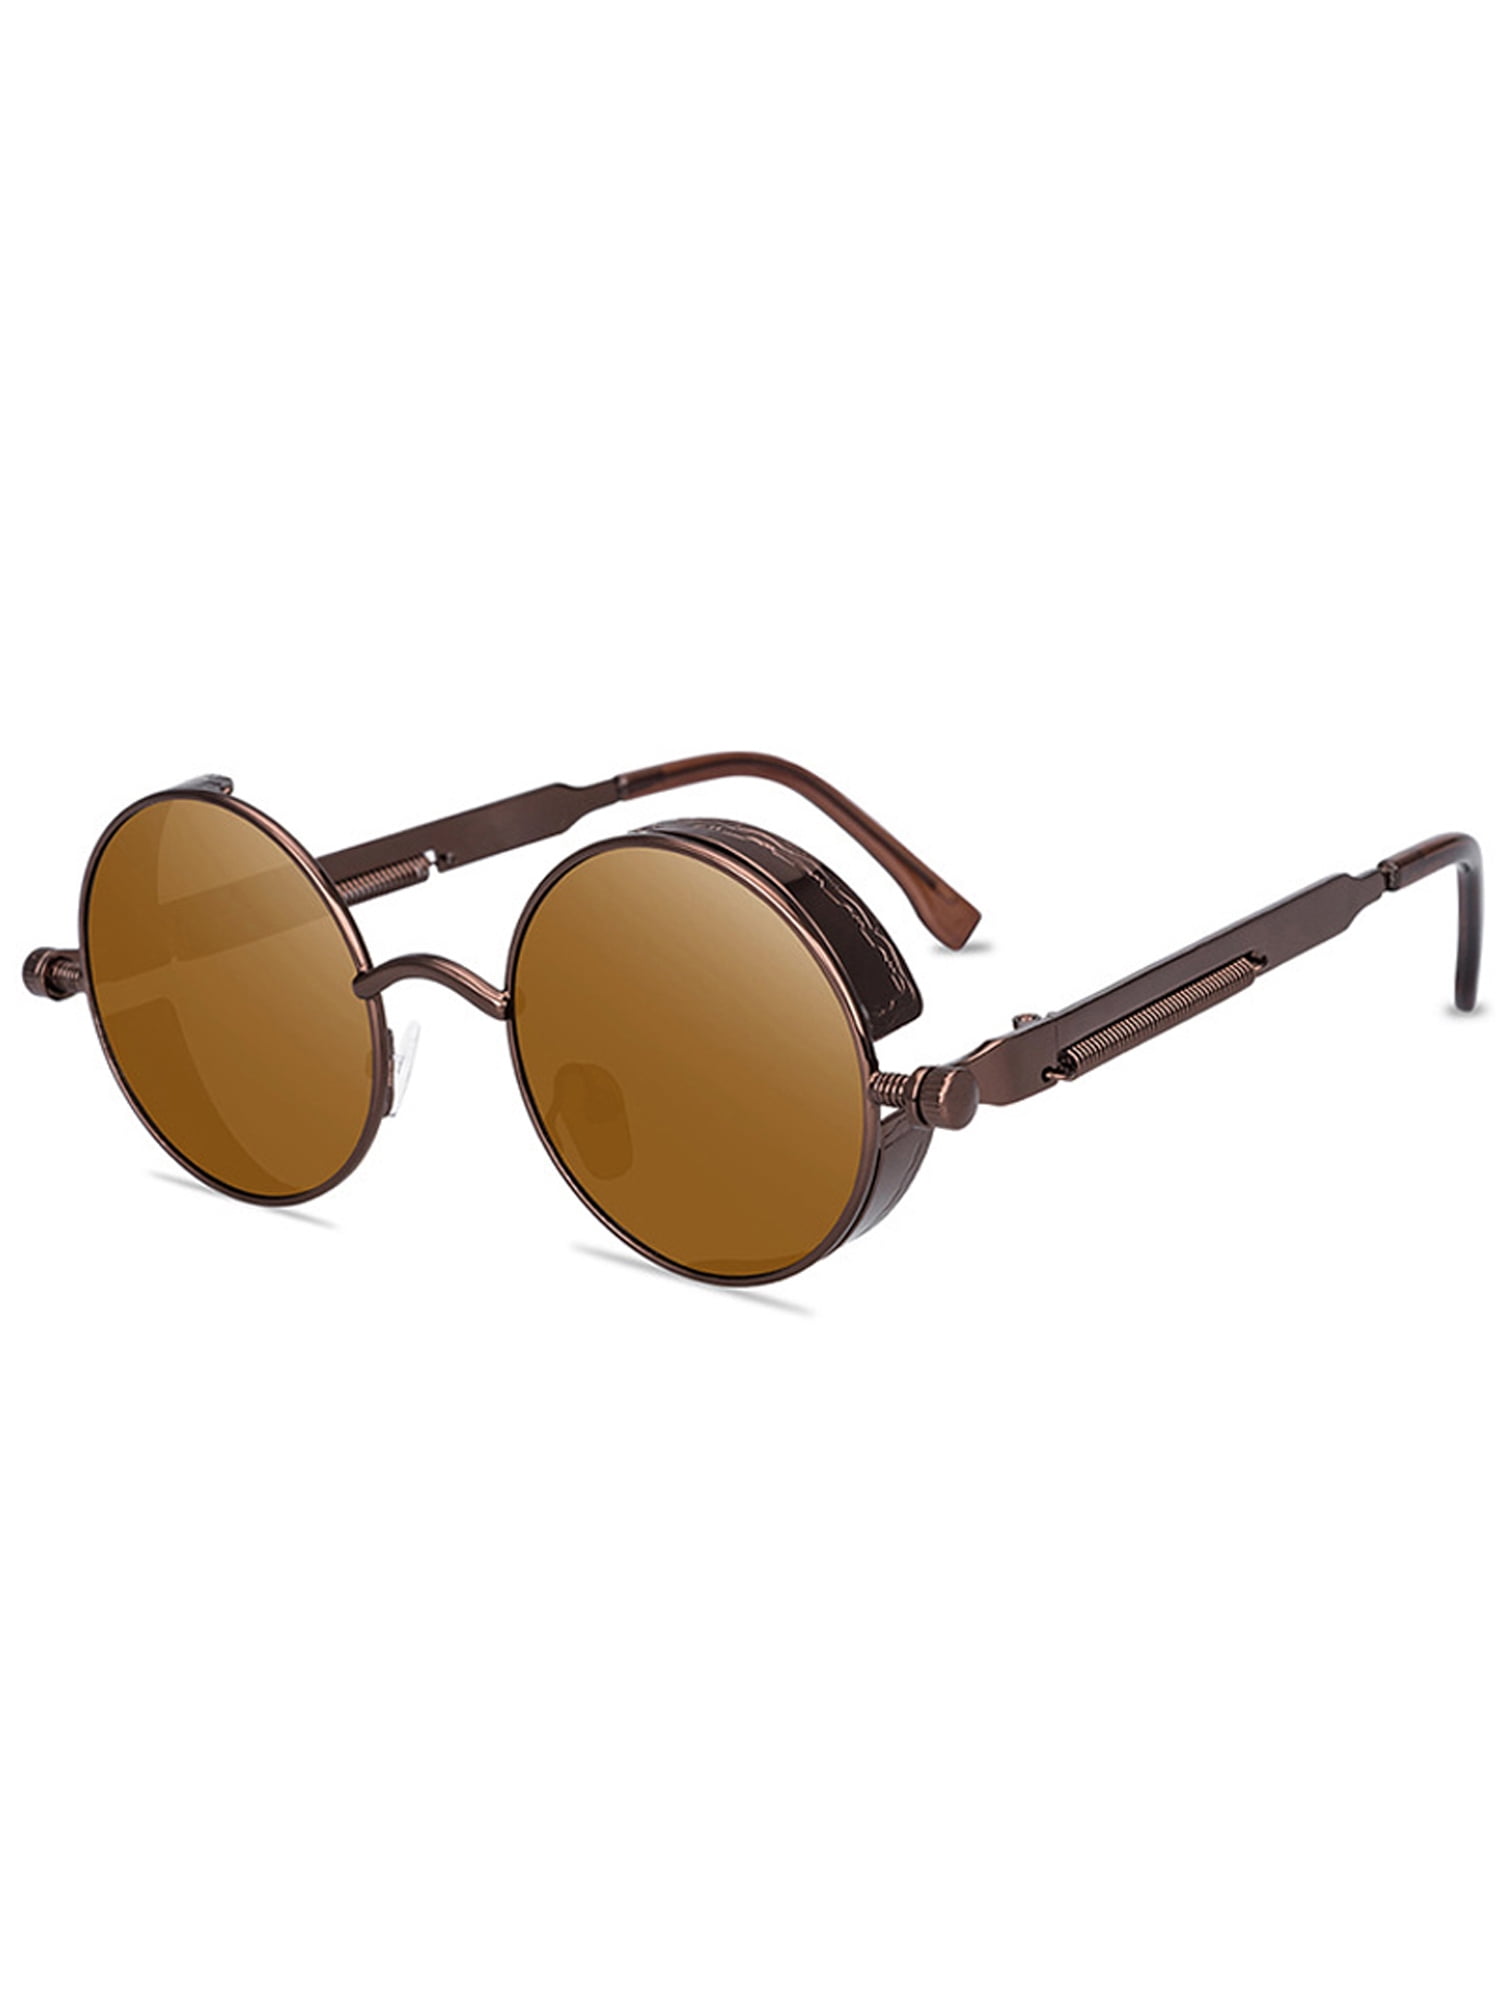 Vintage Polarized Steampunk Sunglasses Men UV400 Round Mirrored Retro Sunglasses